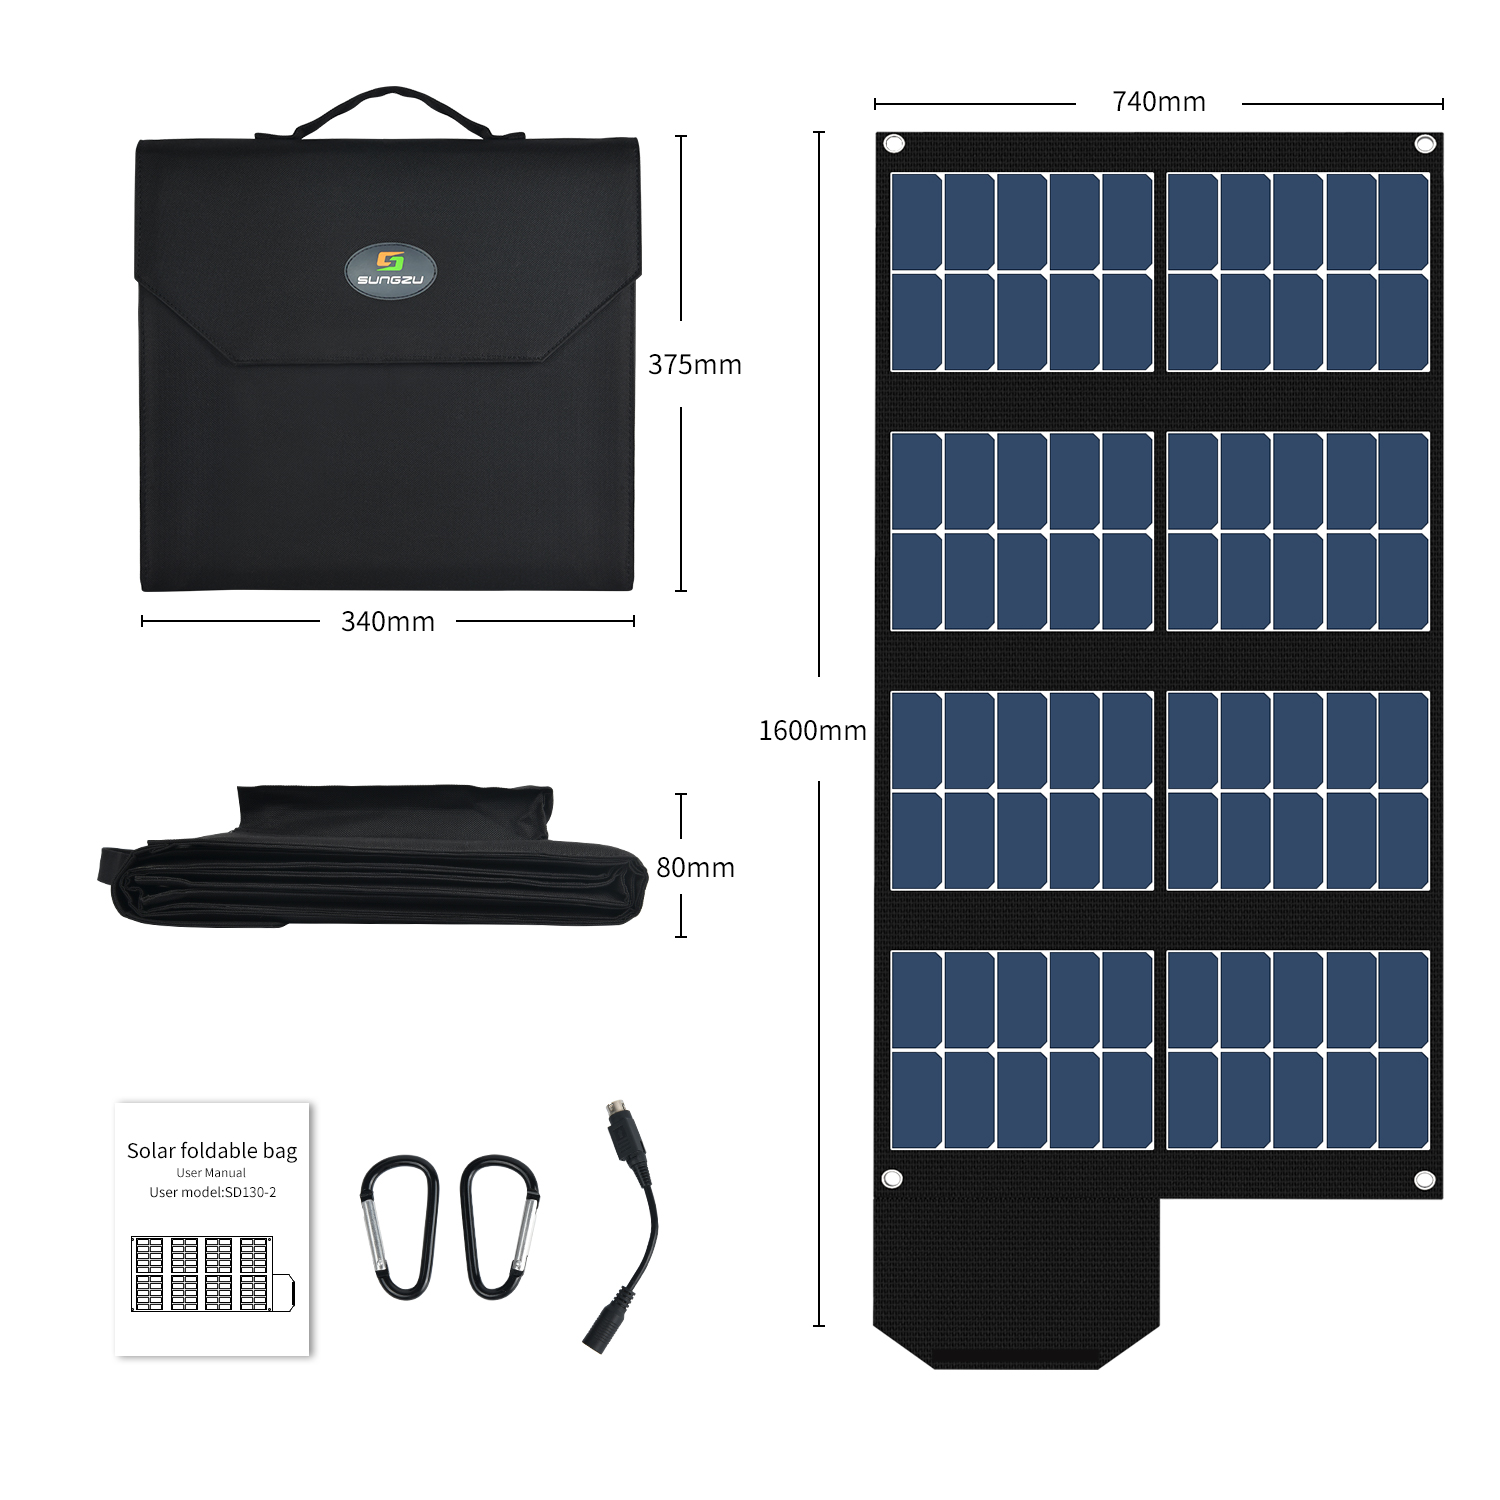 Sungzu panel 130W solar portable Bank Power & Charger | Solar